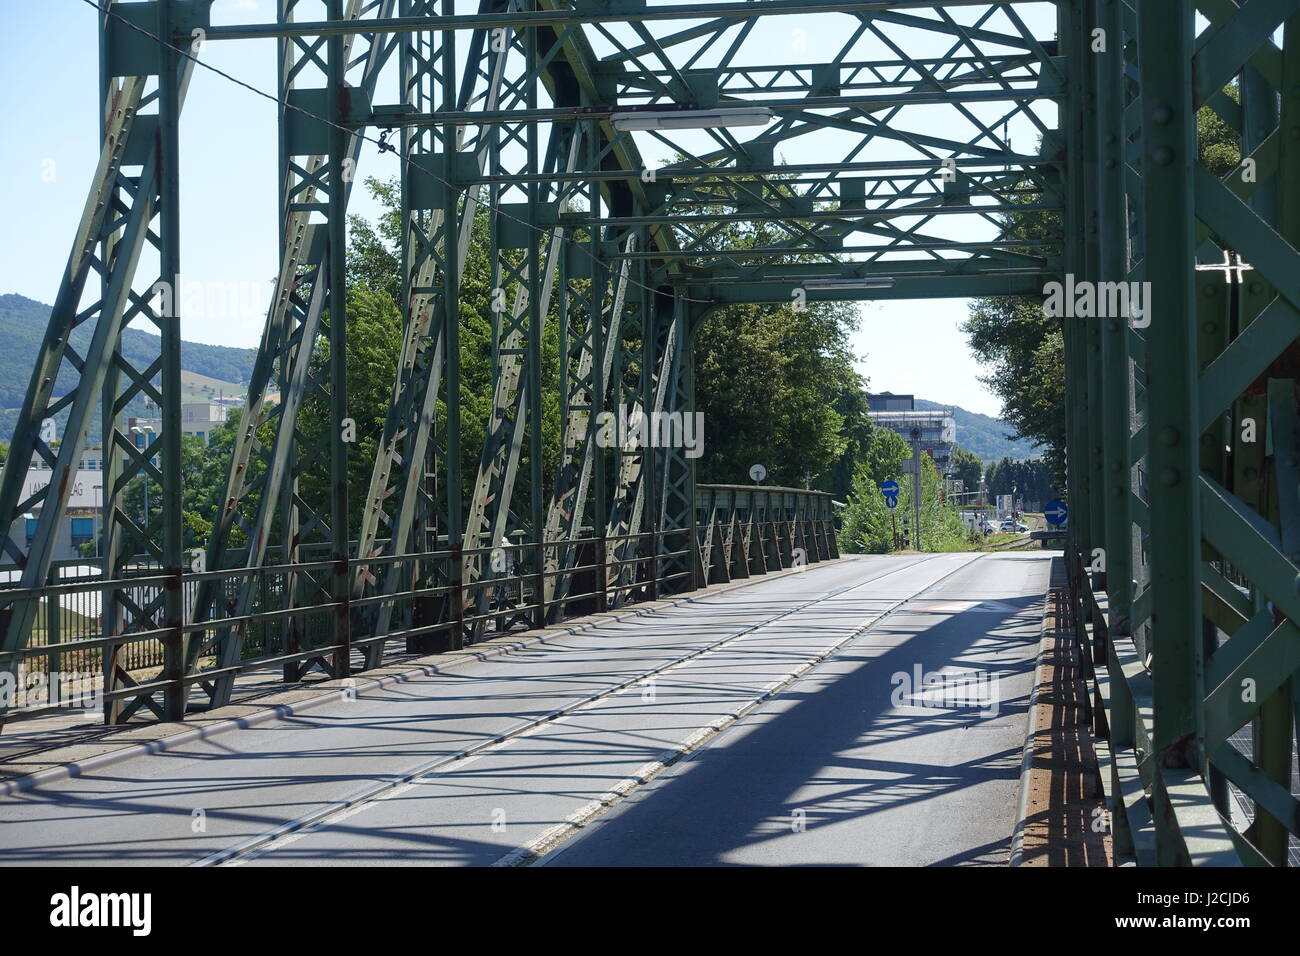 Linz, historische Eisenbahnbrücke Stock Photo